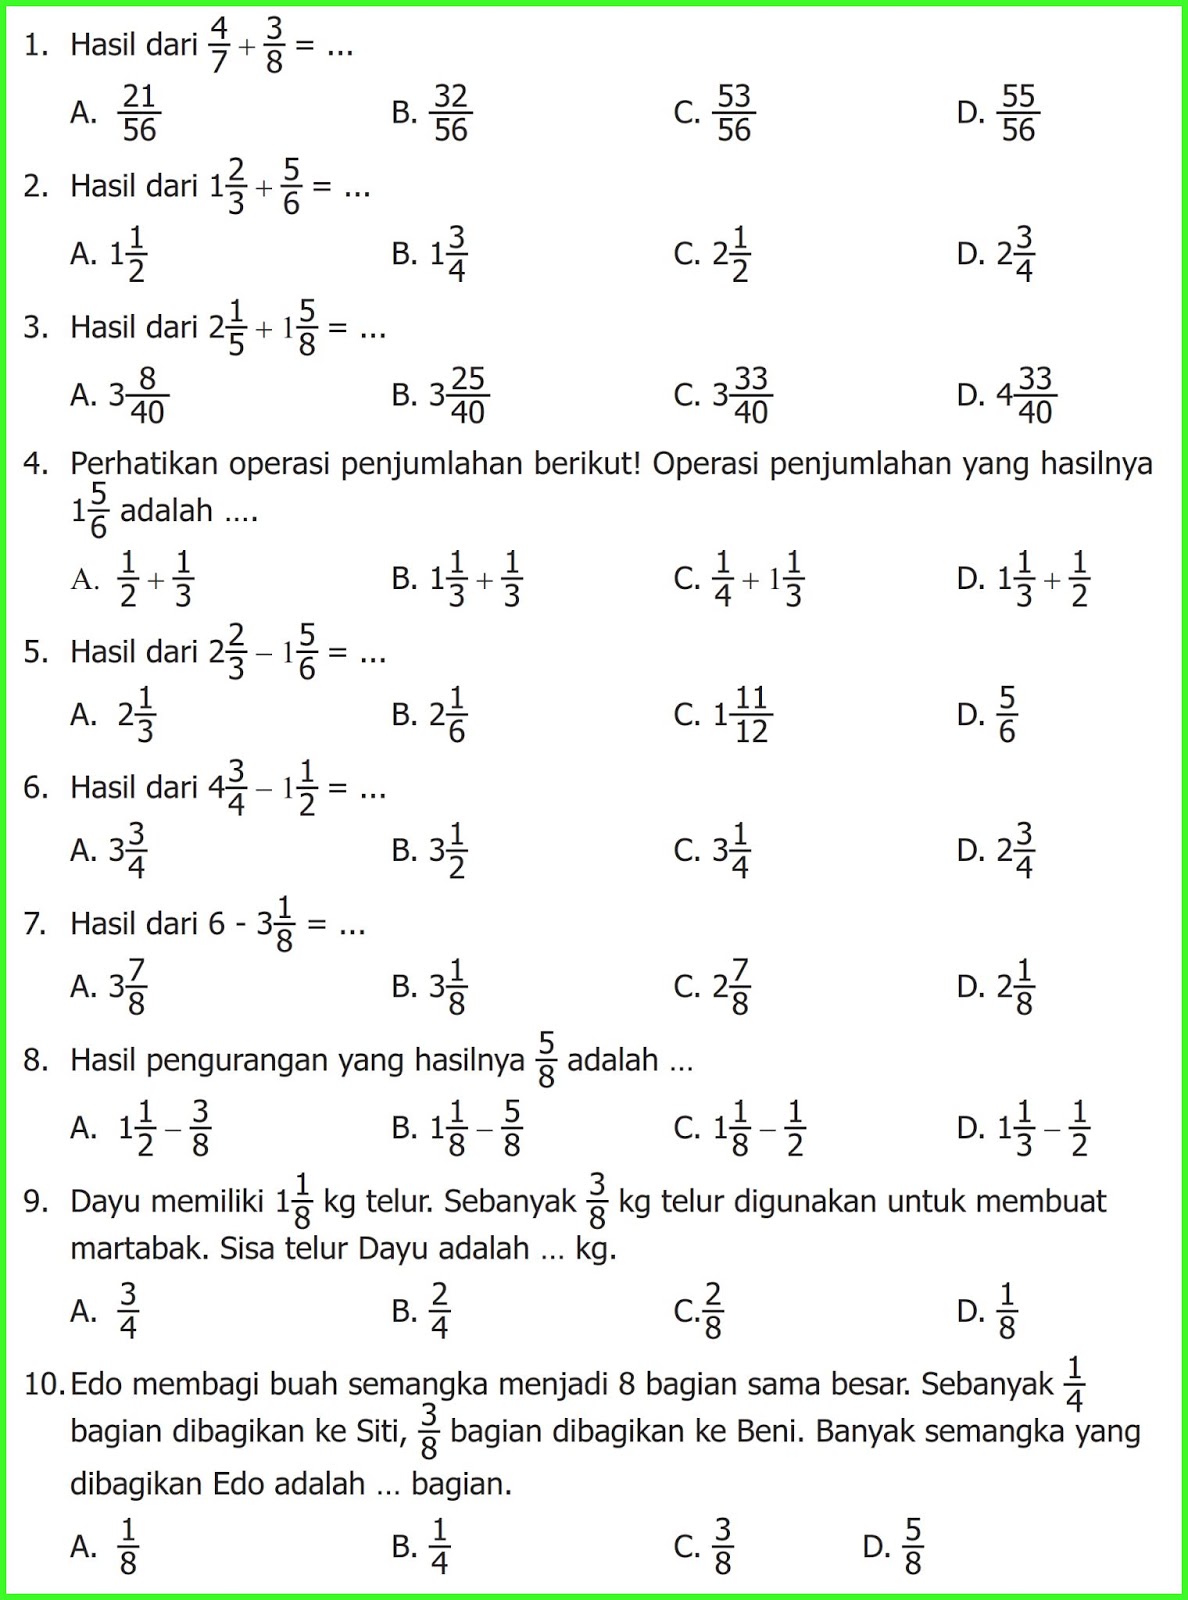 Kunci Jawaban Buku Mari Belajar Matematika Kelas 5 Halaman 15 - key